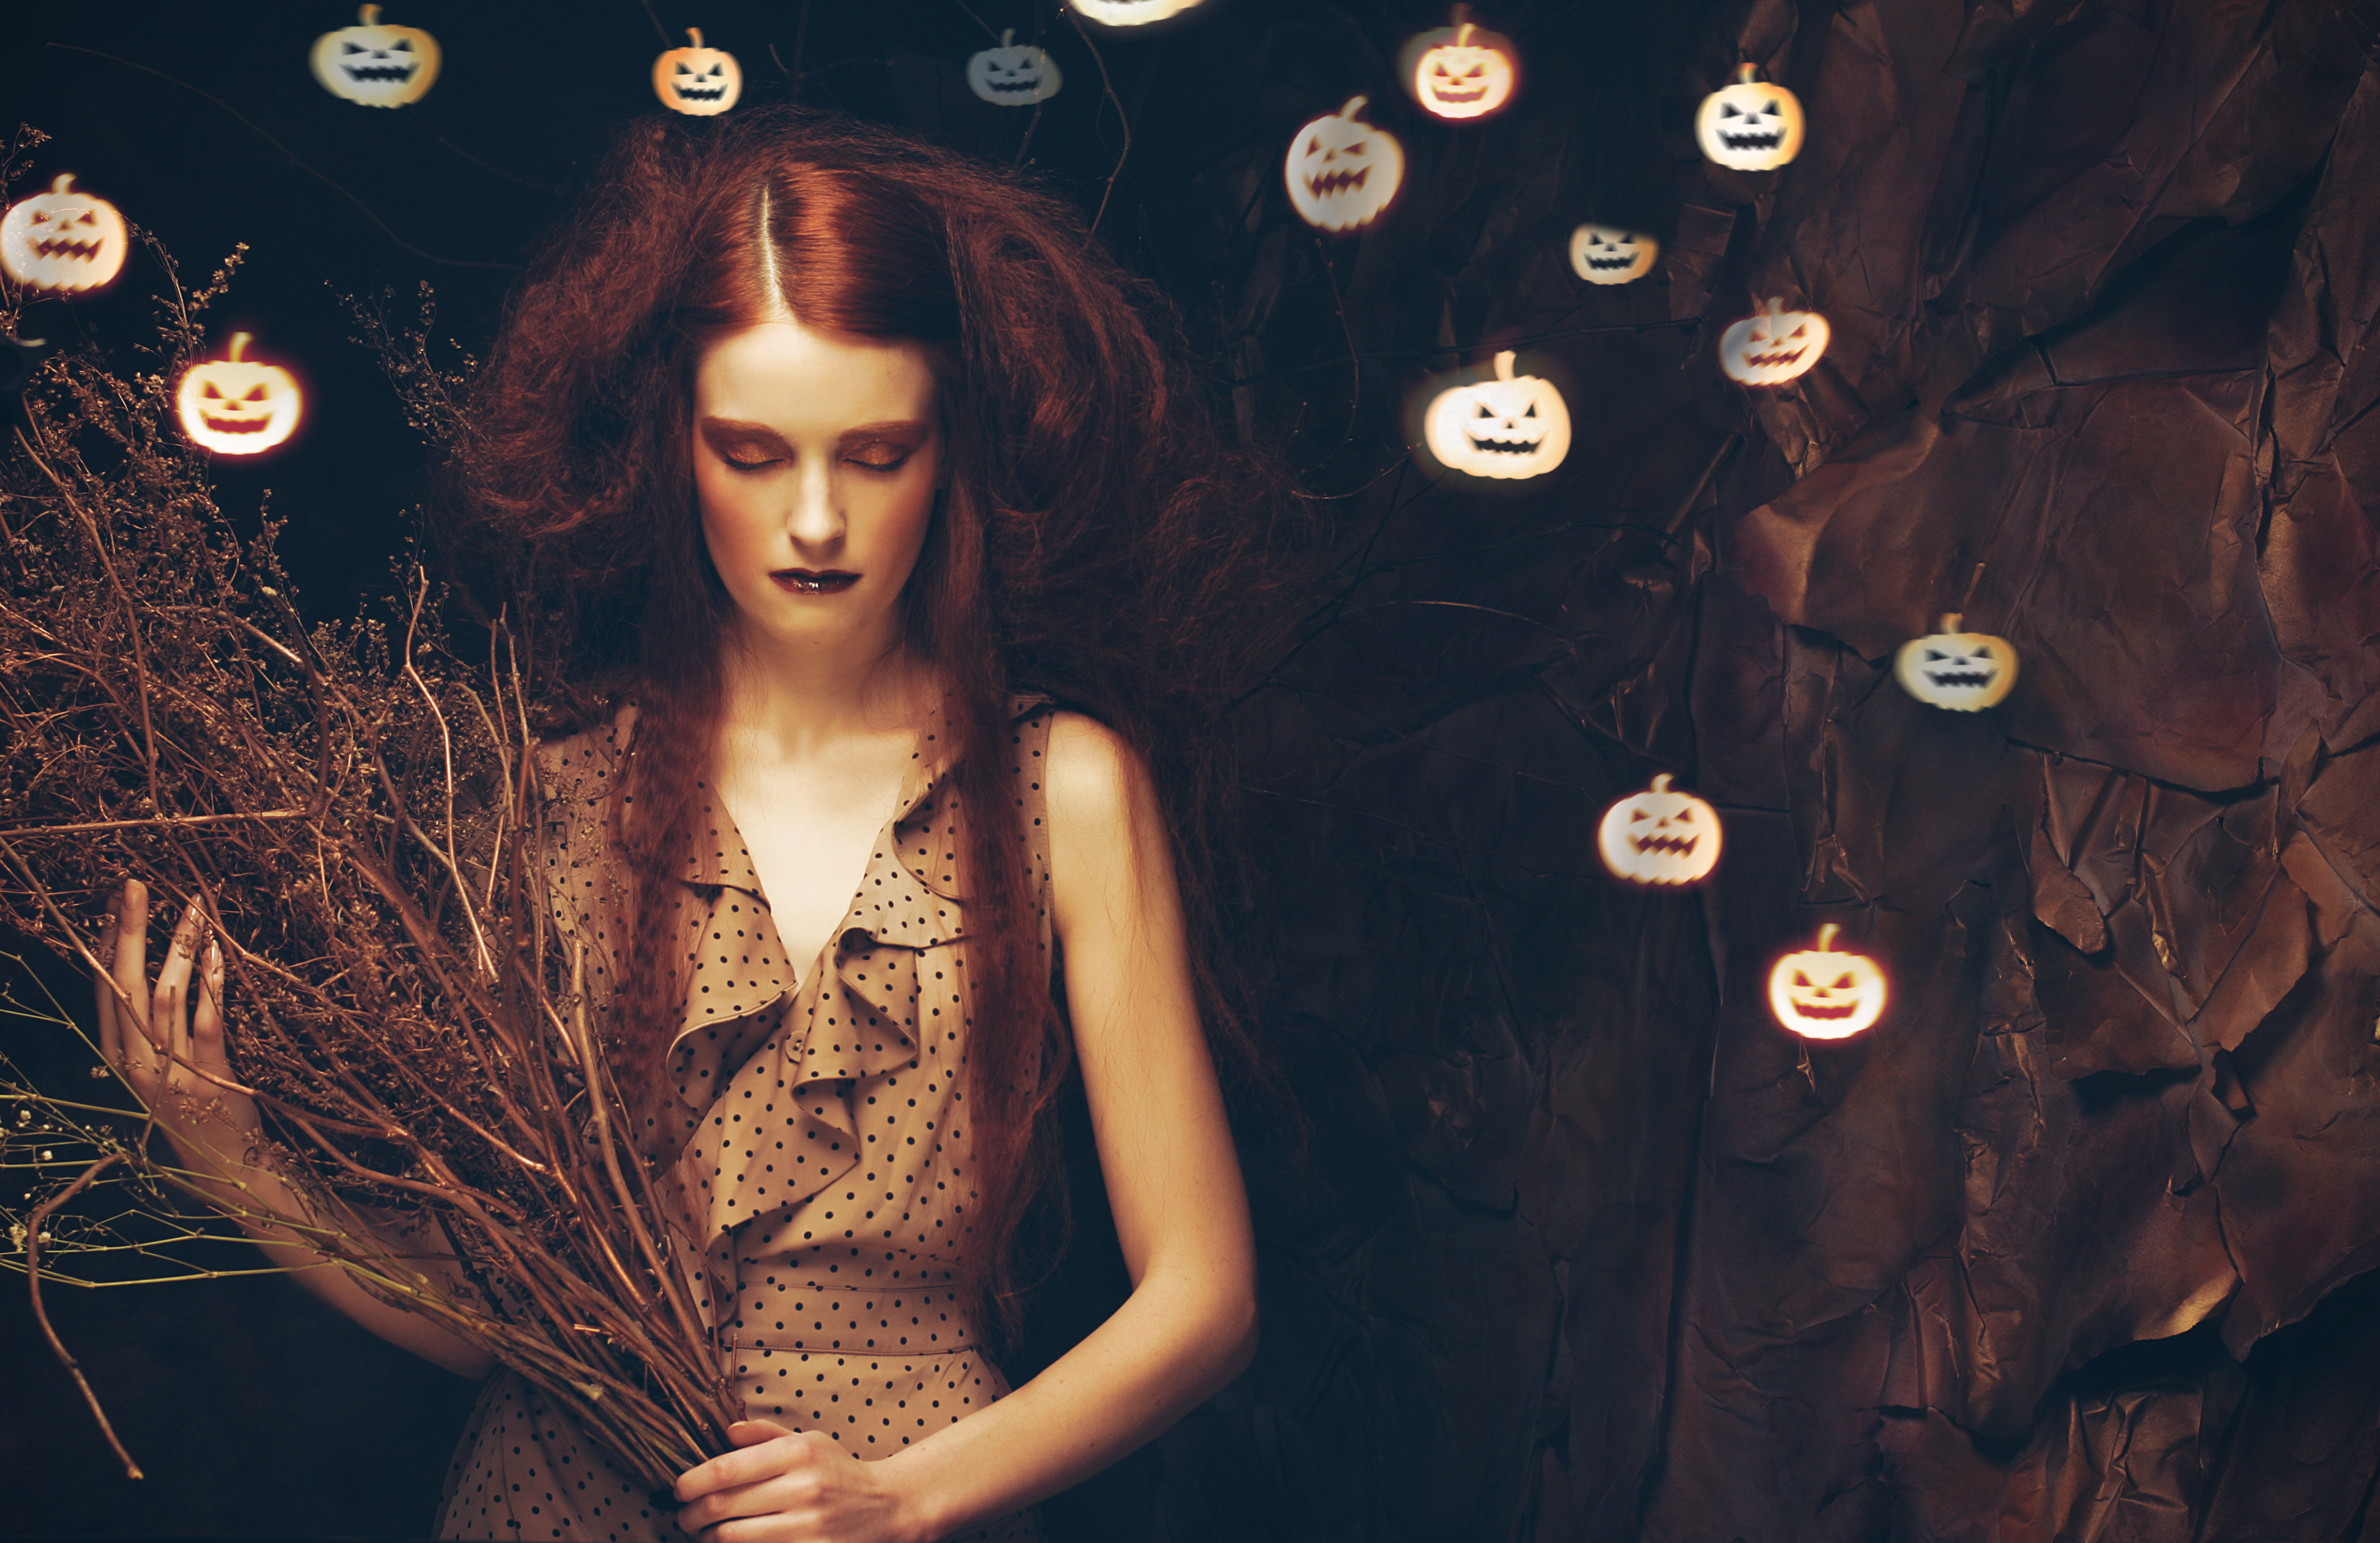 Halloween pumpkin edit with lights